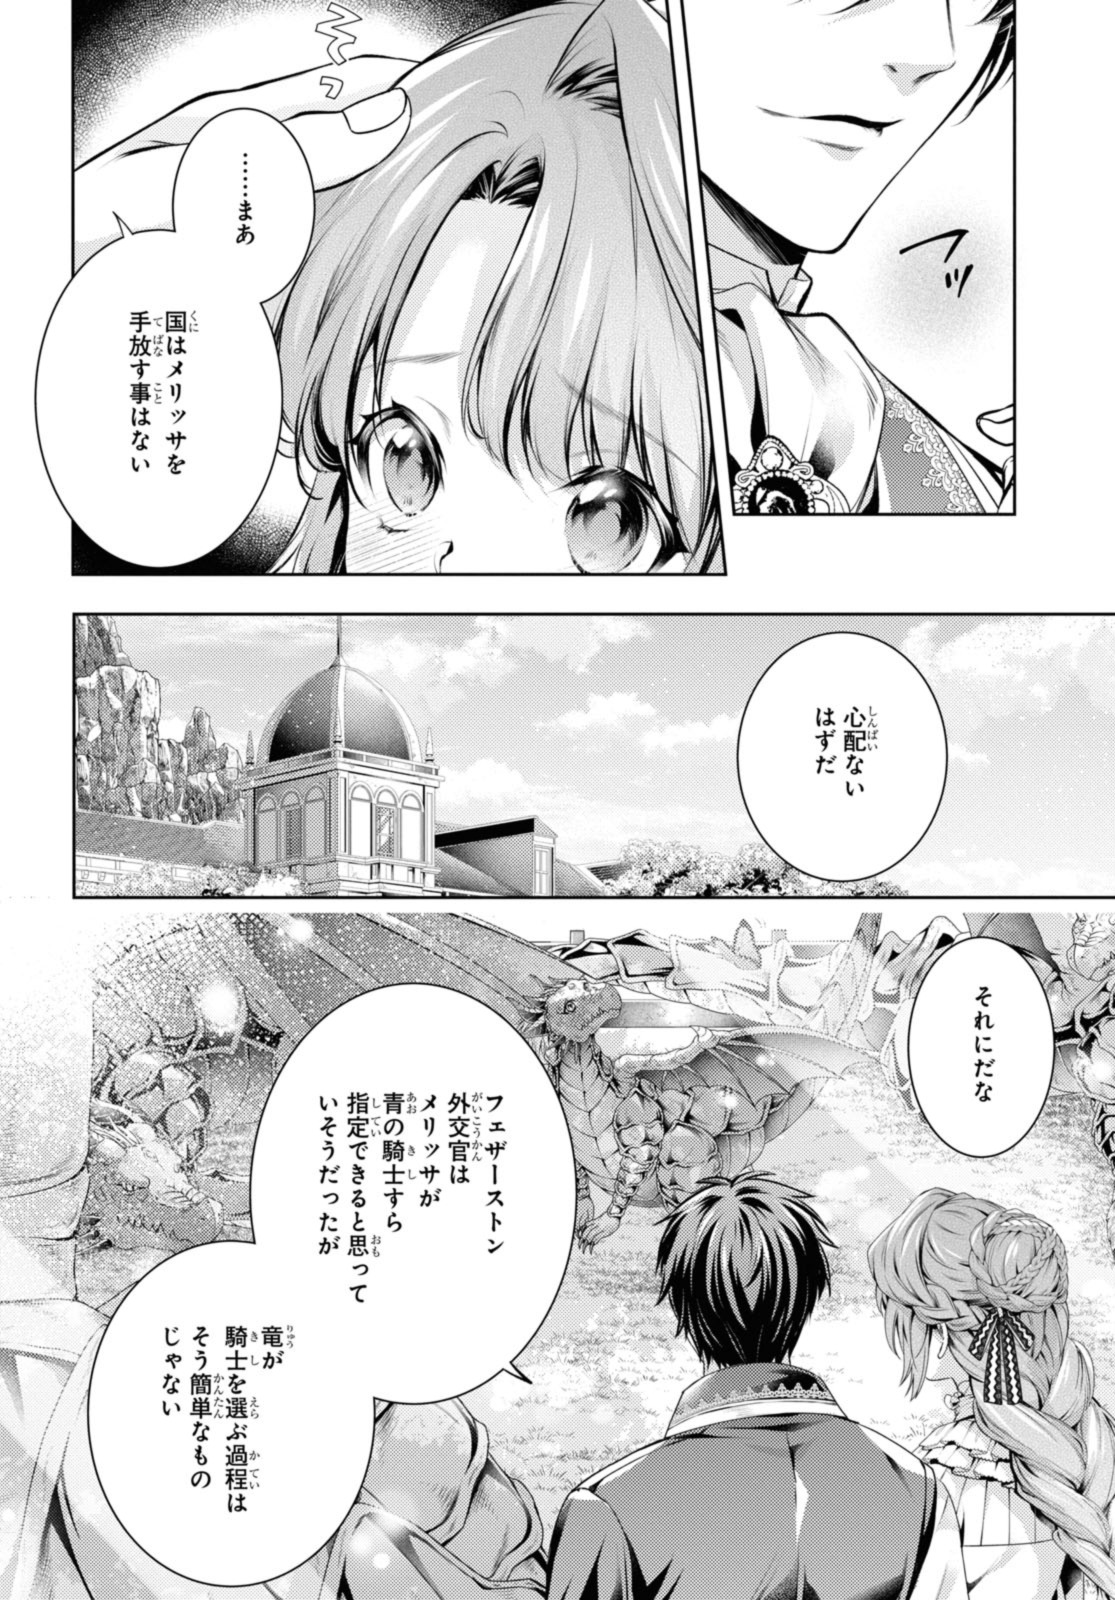 Ryukishi no Okiniiri - Chapter 46.1 - Page 10